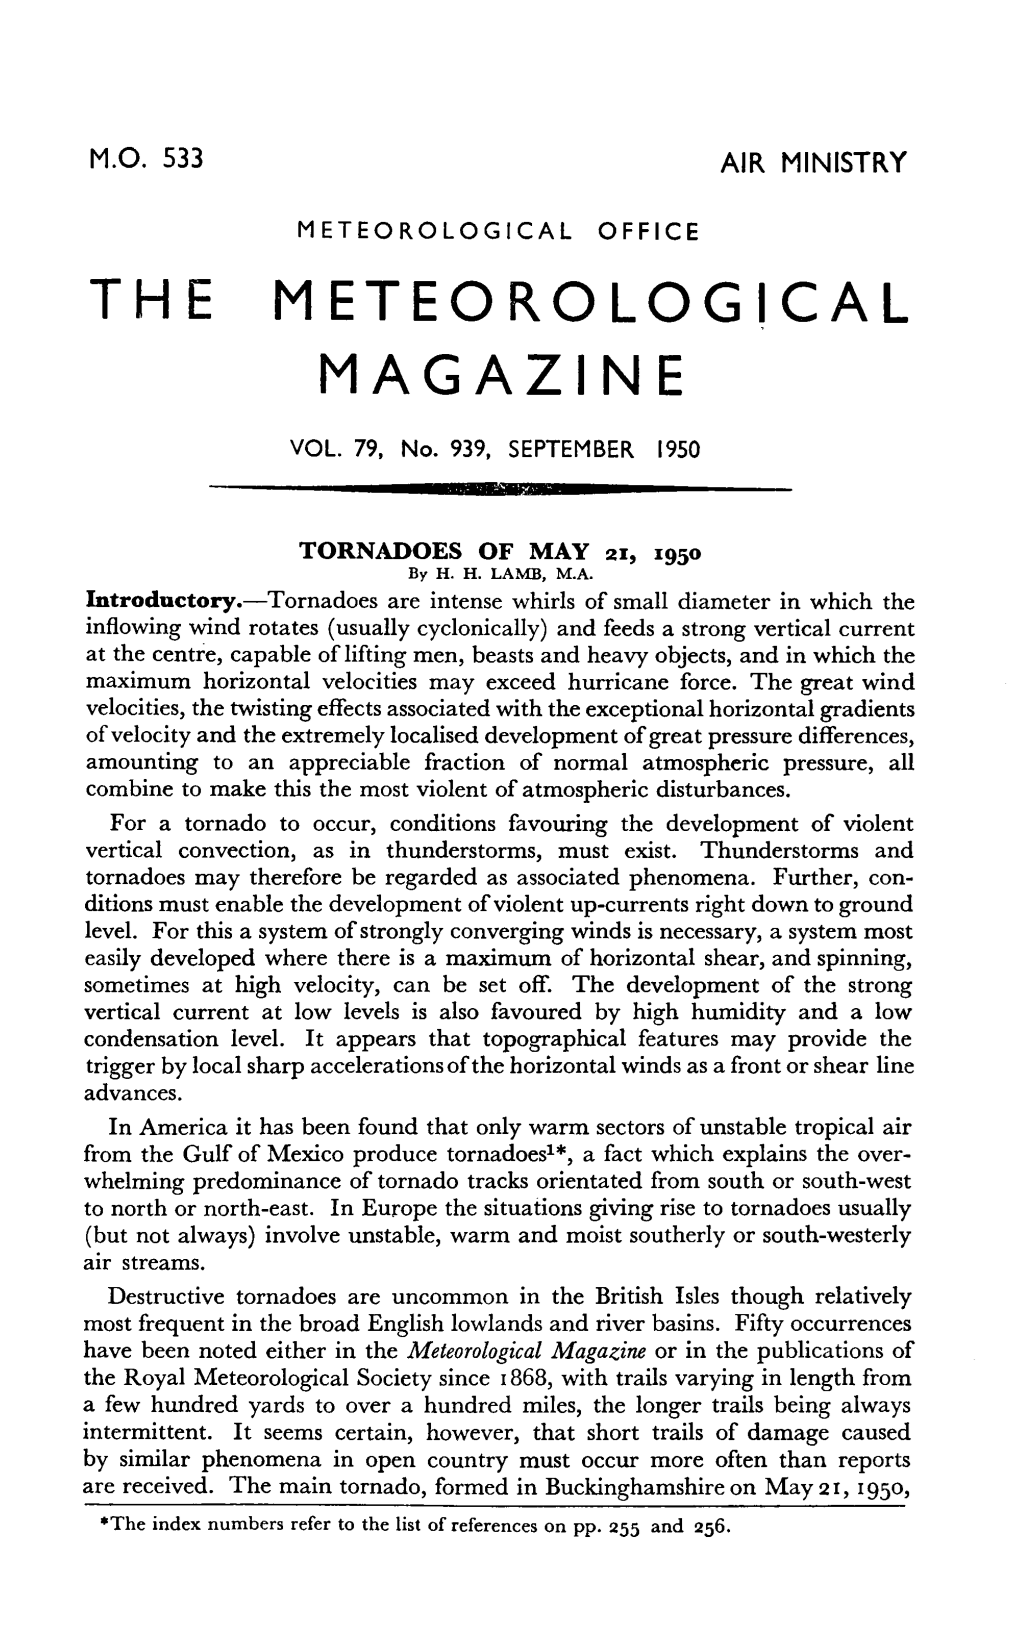 The Meteorological Magazine